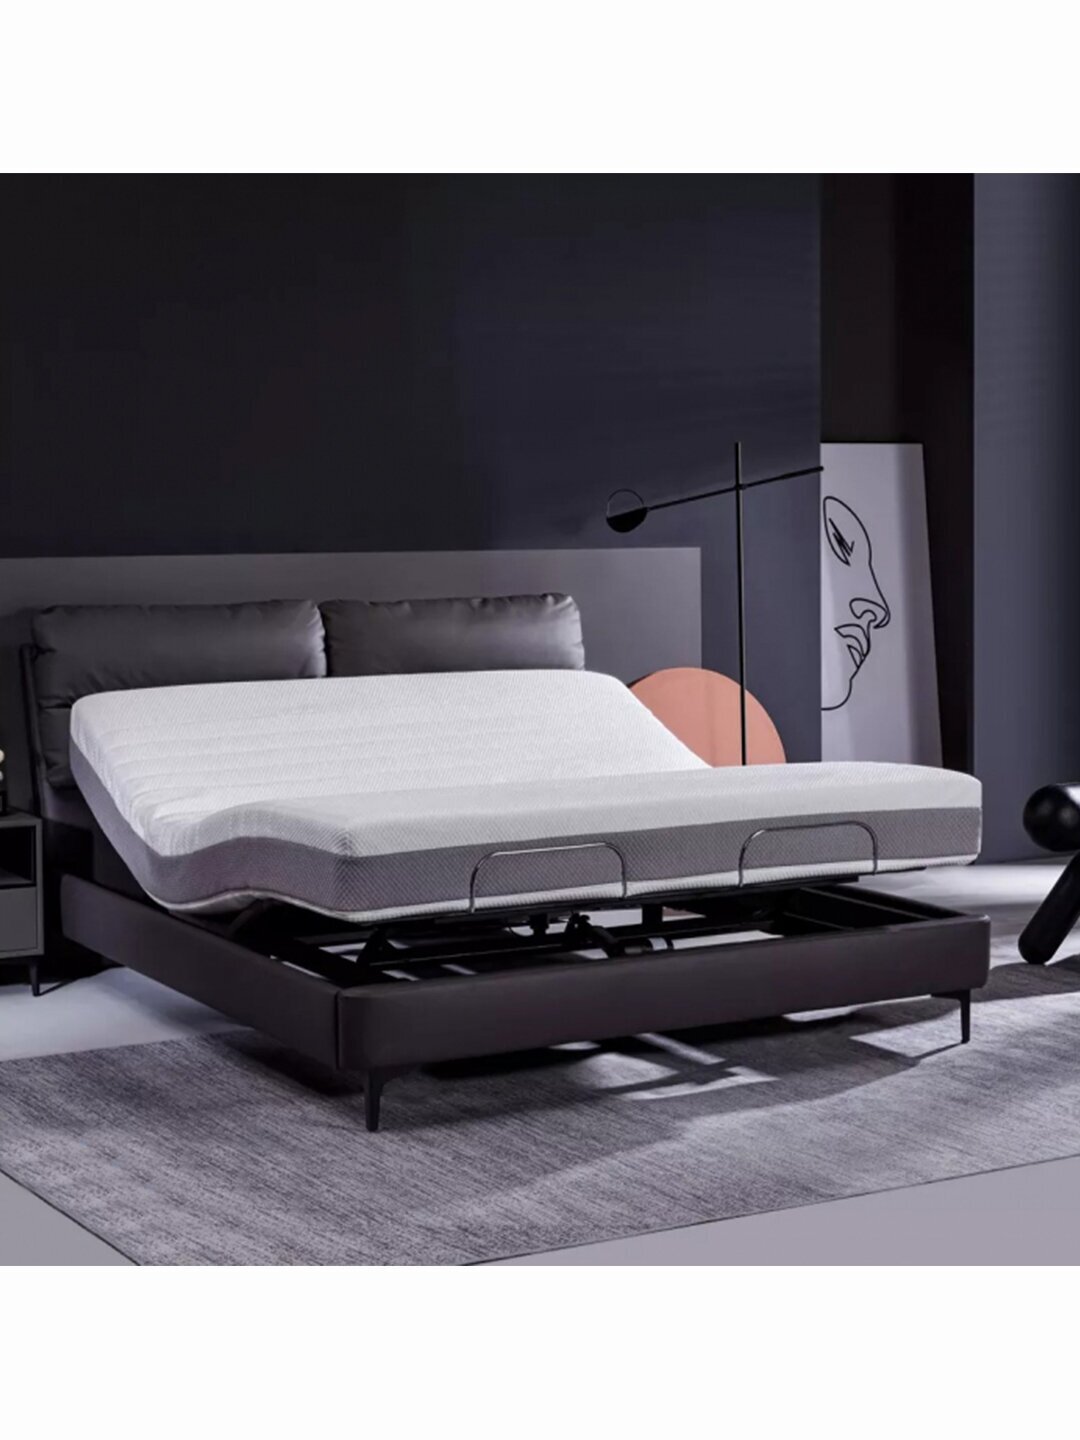 Умная двуспальная кровать Xiaomi 8H Milan Smart Leather Electric Bed S-Pro 1.8 m Beige DT4 Pro (без матраса)